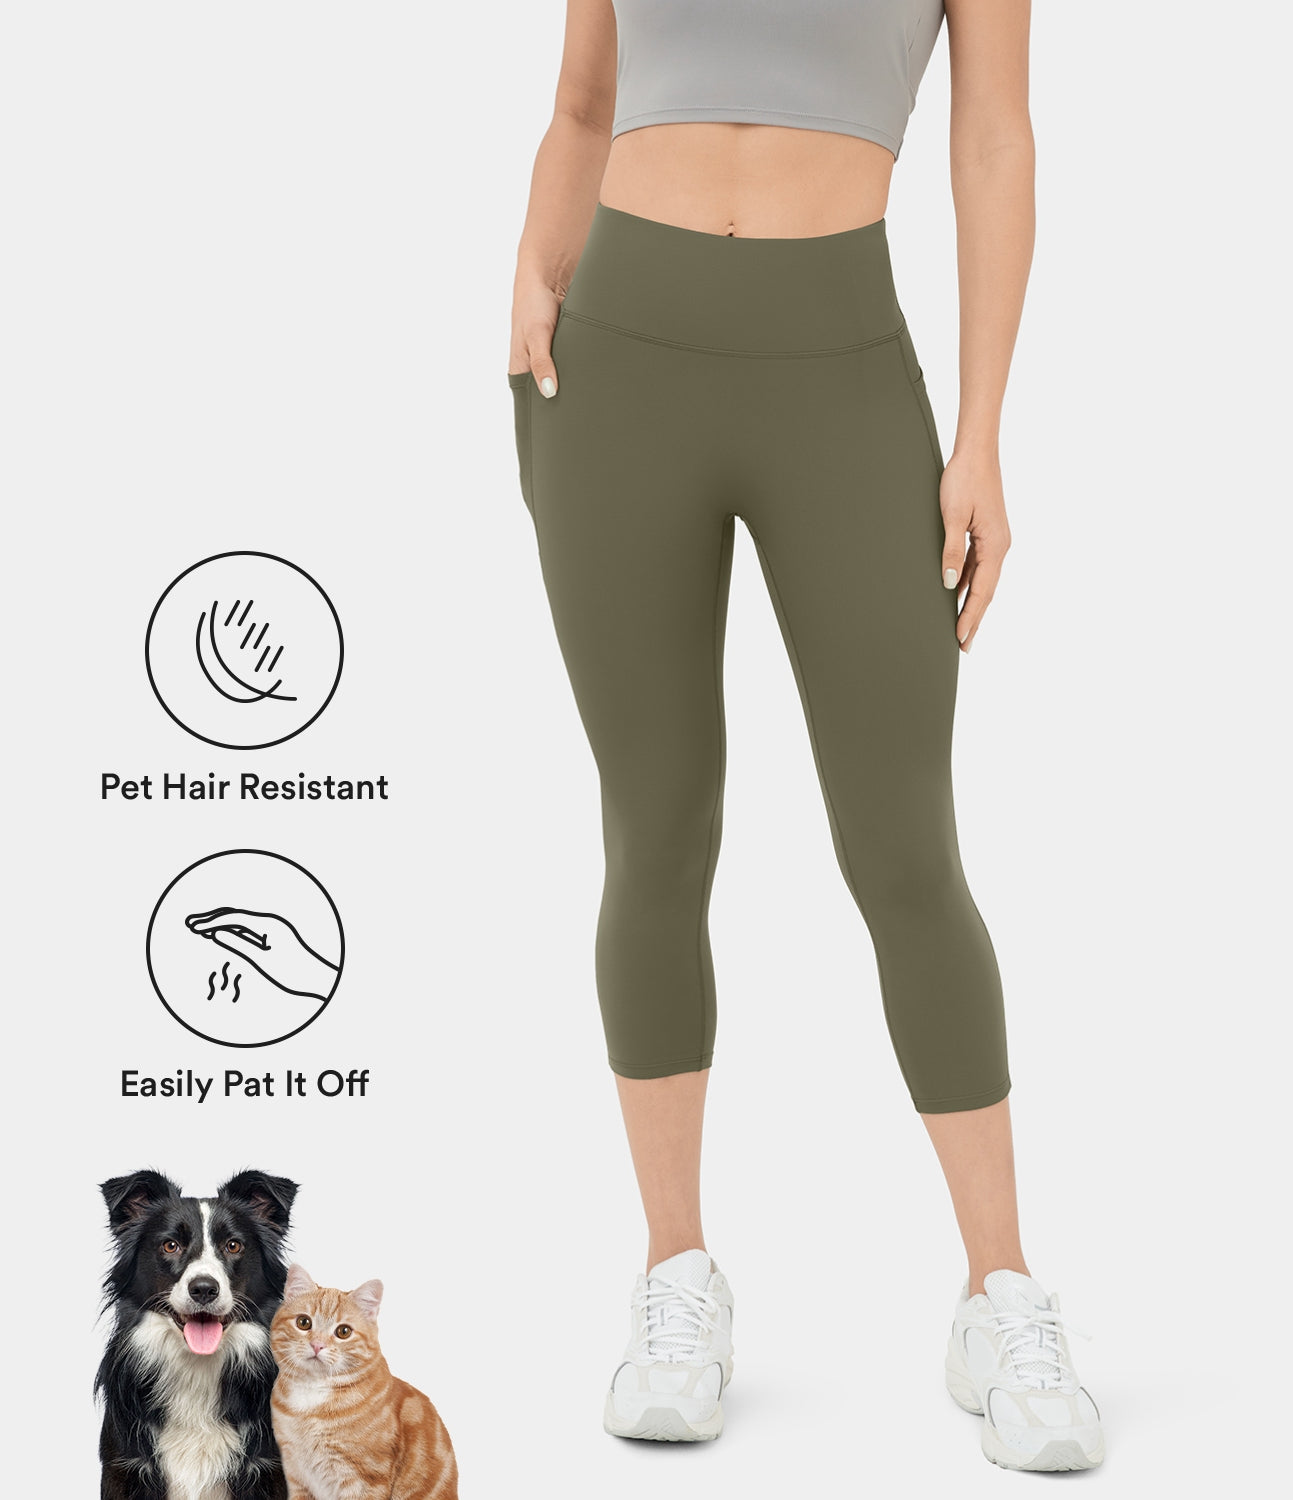 

Halara PatitoffВ® Pet Hair Resistant High Waisted Side Pocket Capri Yoga Leggings - Burnt Olive -  gym leggings leggings with pockets